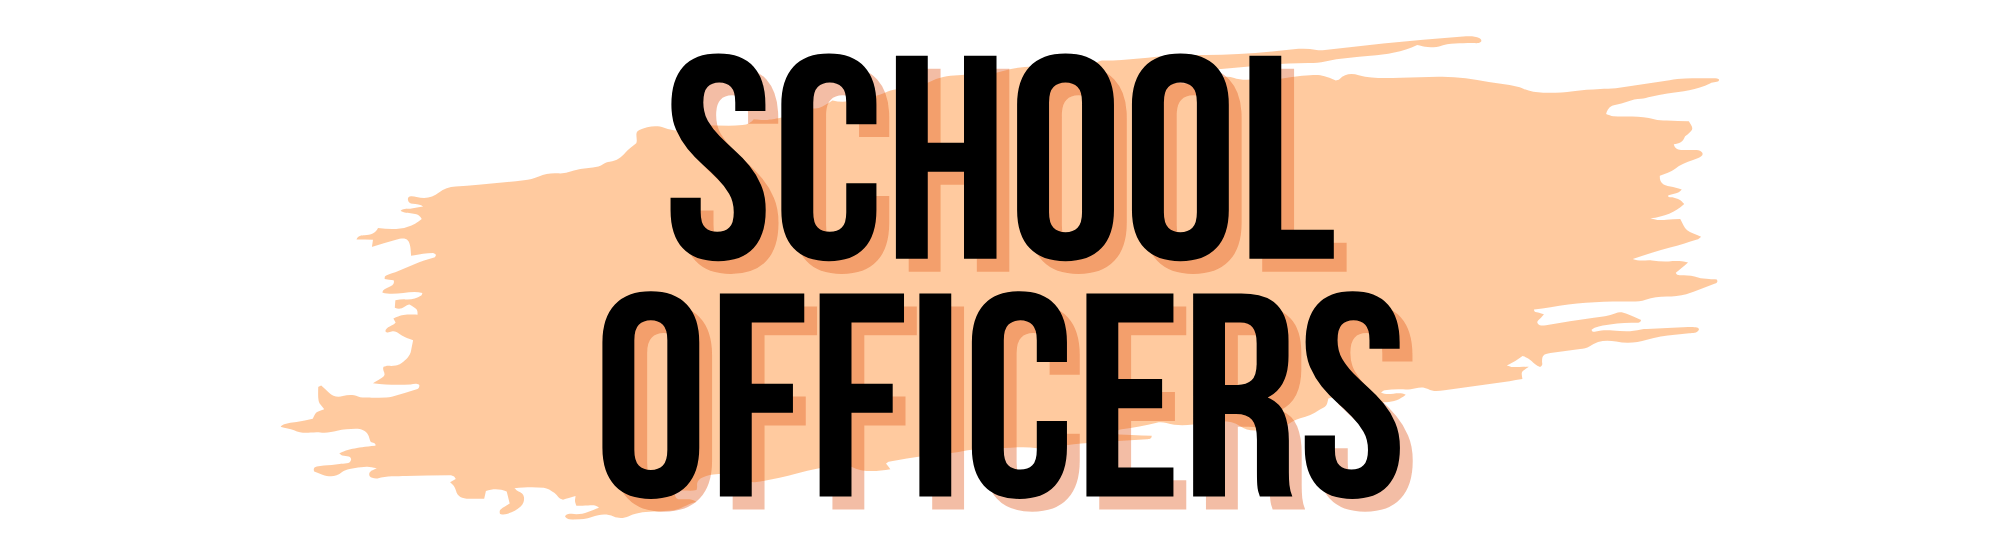 school officers